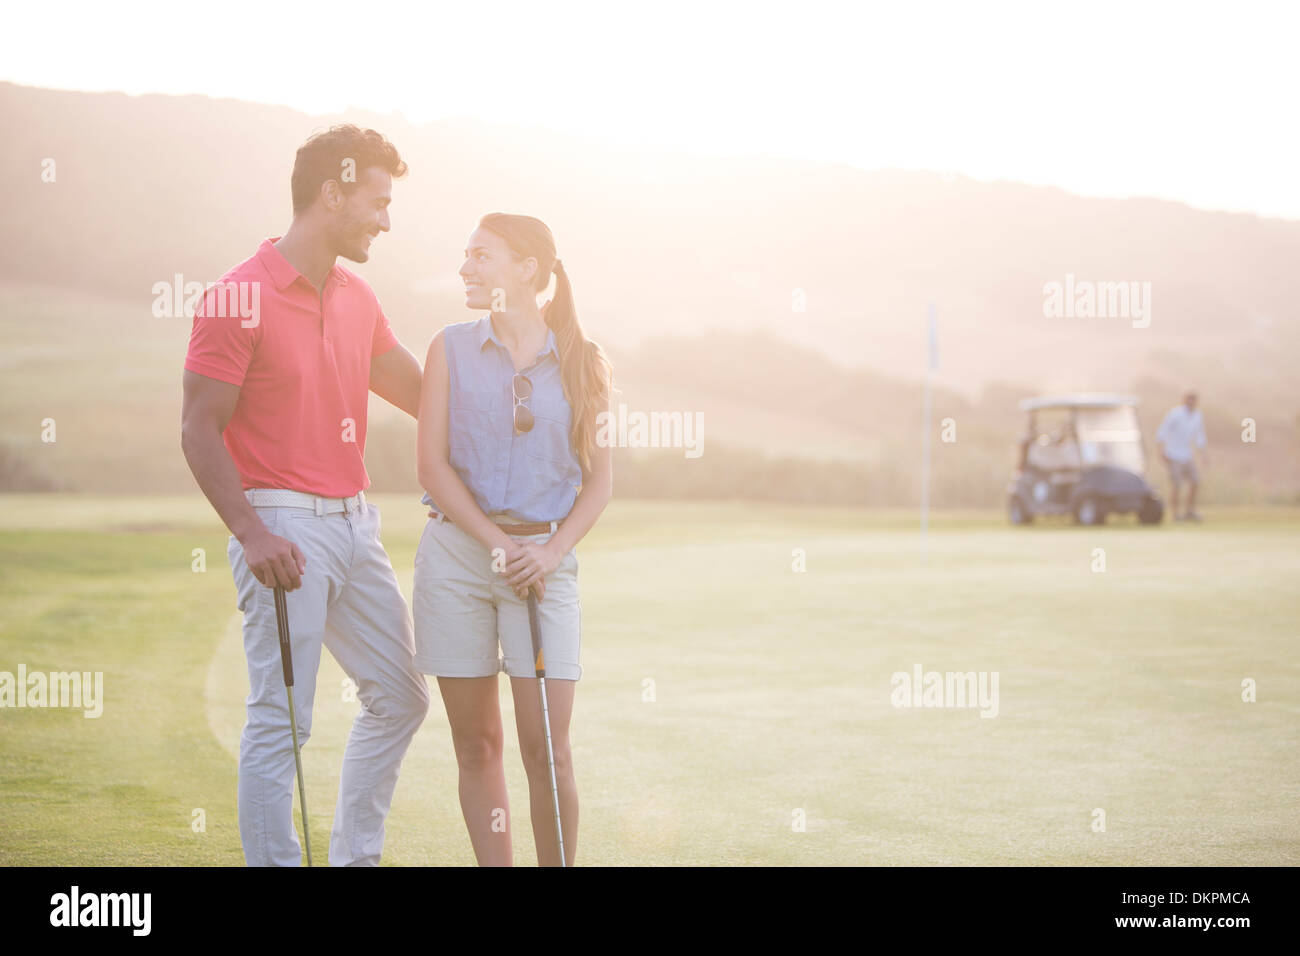 Couple on golf course Banque D'Images